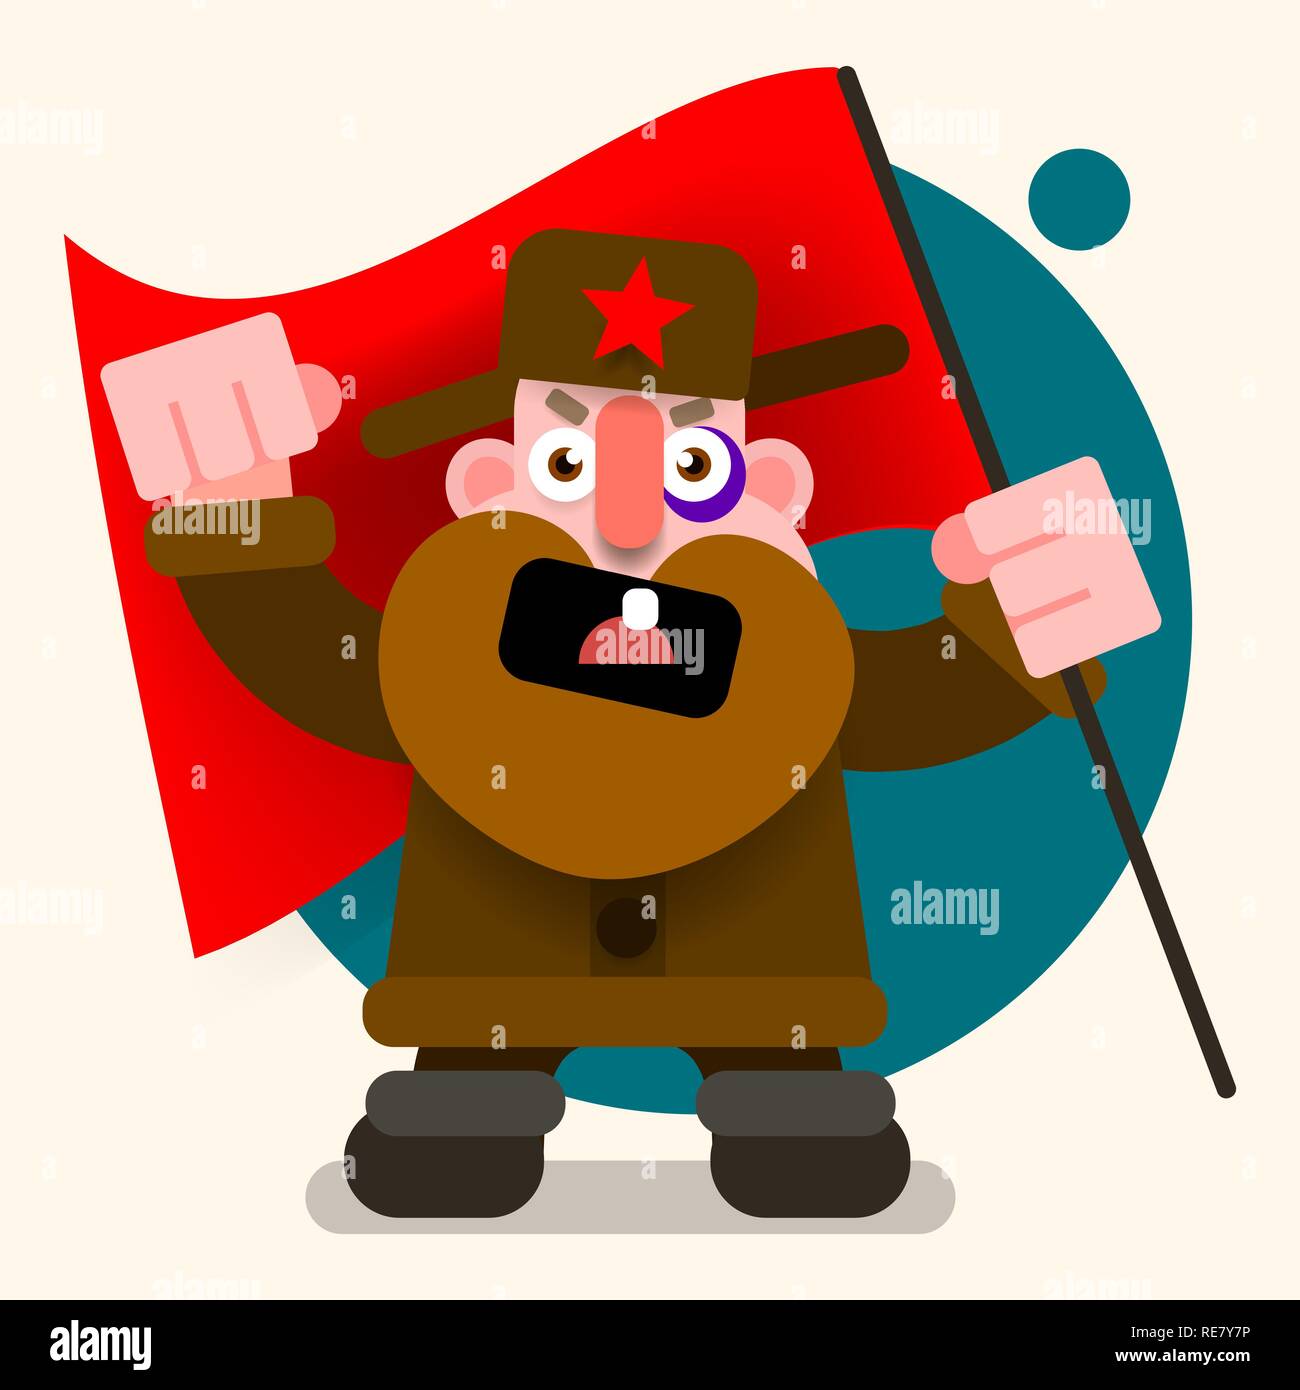 Revolucion rusa caricatura fotografías e imágenes de alta resolución - Alamy